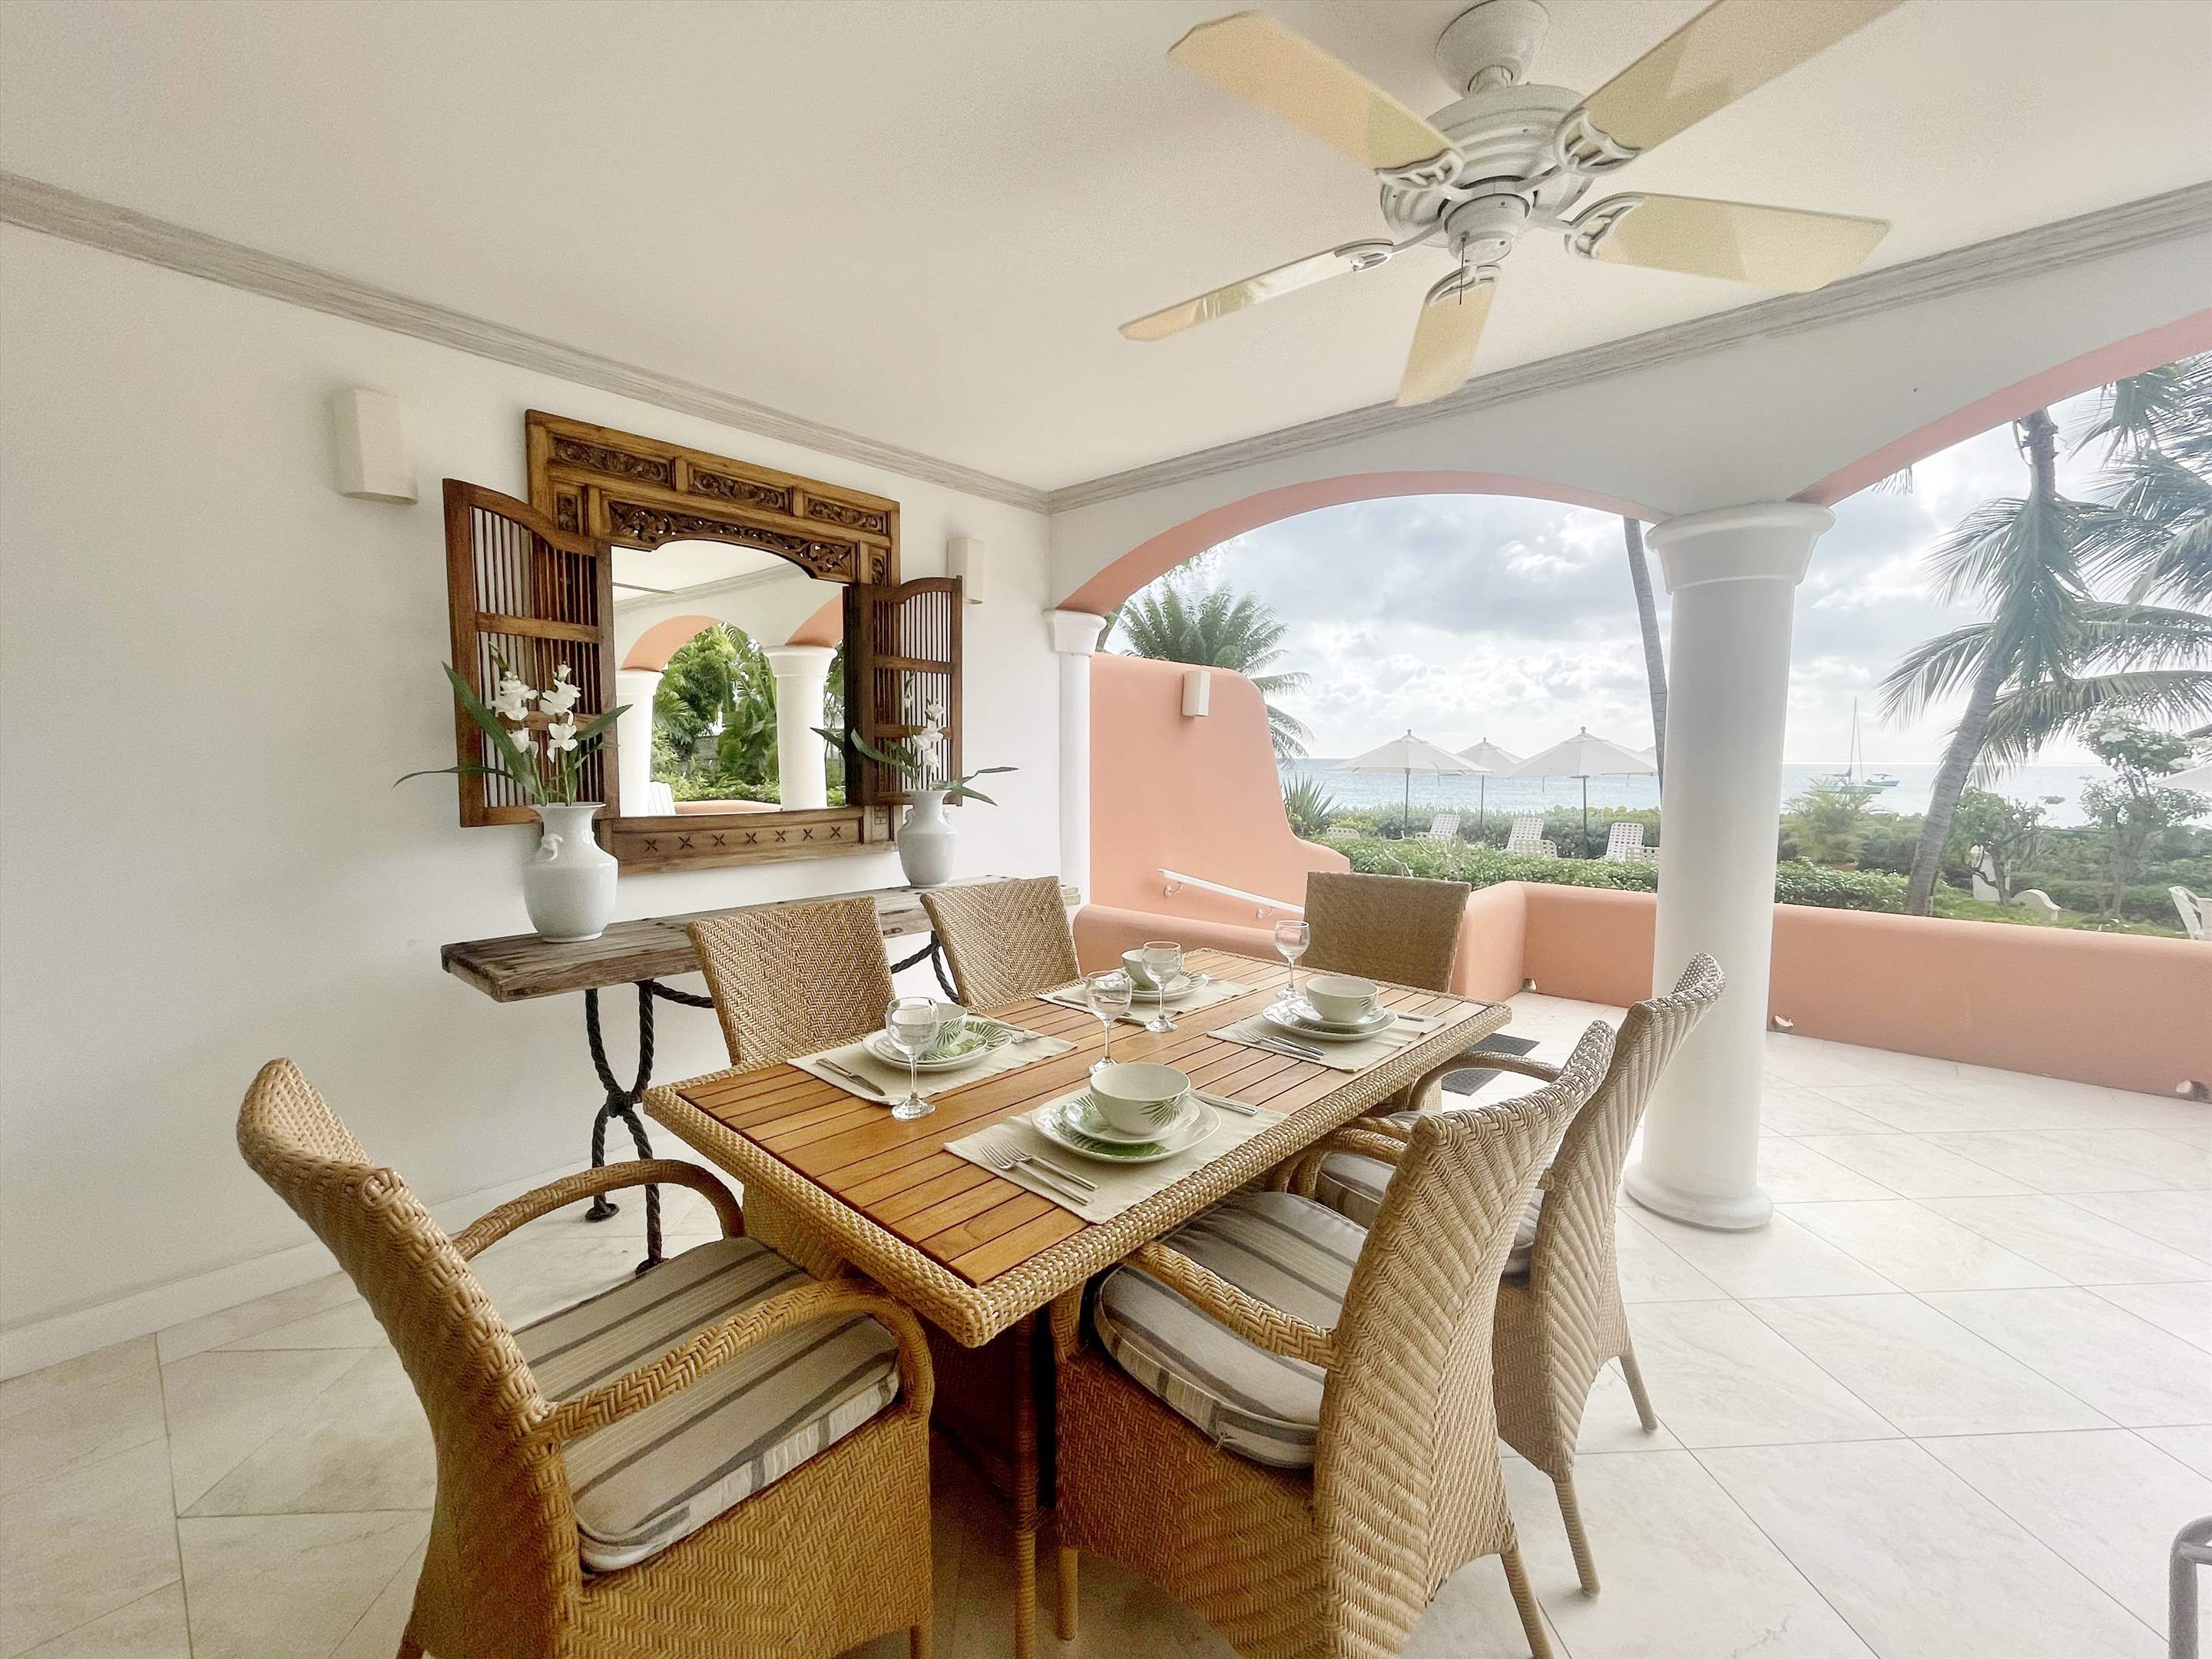 Villas on the Beach 103, 2 bedroom, 2 bedroom apartment in St. James & West Coast, Barbados Photo #2